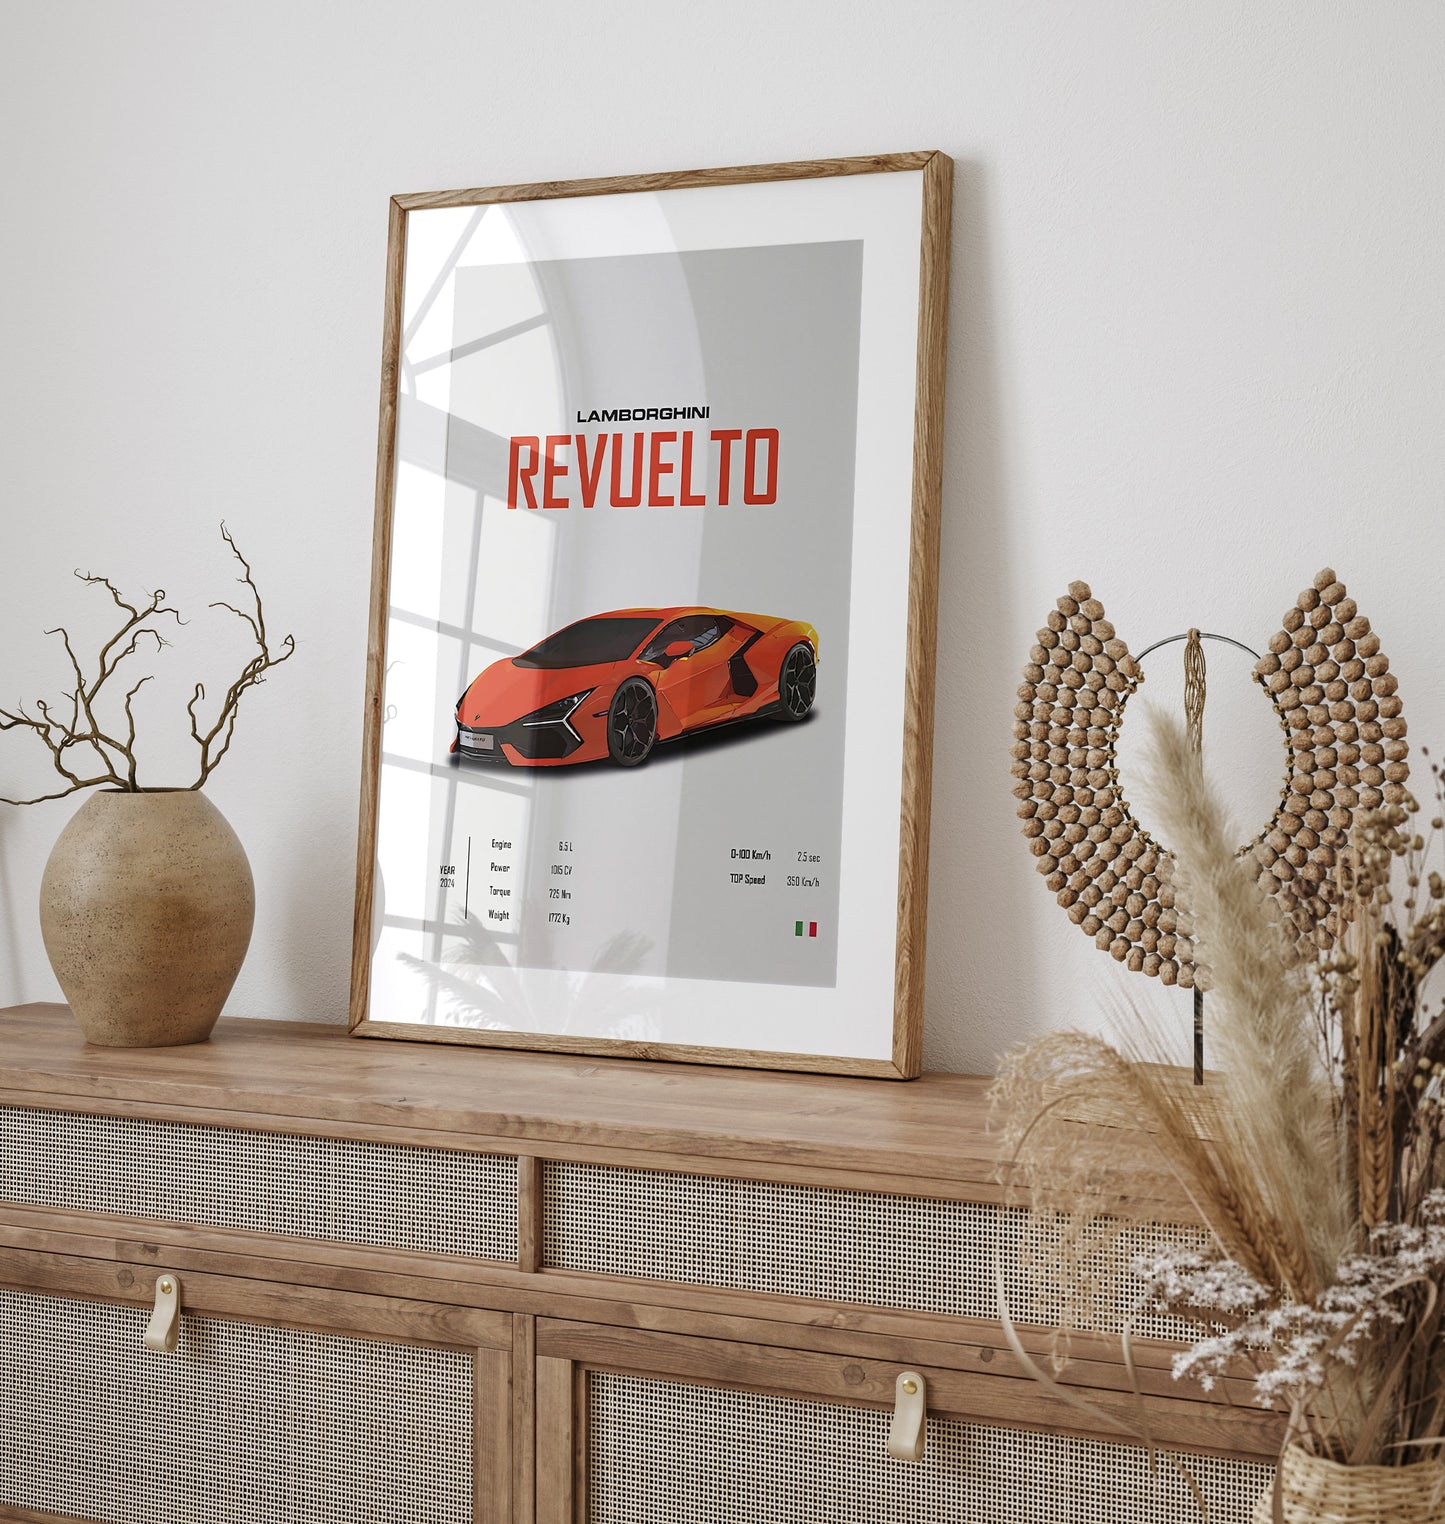 Poster Sportwagen Mclaren Lamborghini Porsche Klassiker Legenden  I Geschenk für ihn I Wohnzimmmer & Büro I Wand Deko I Print ohne Rahmen